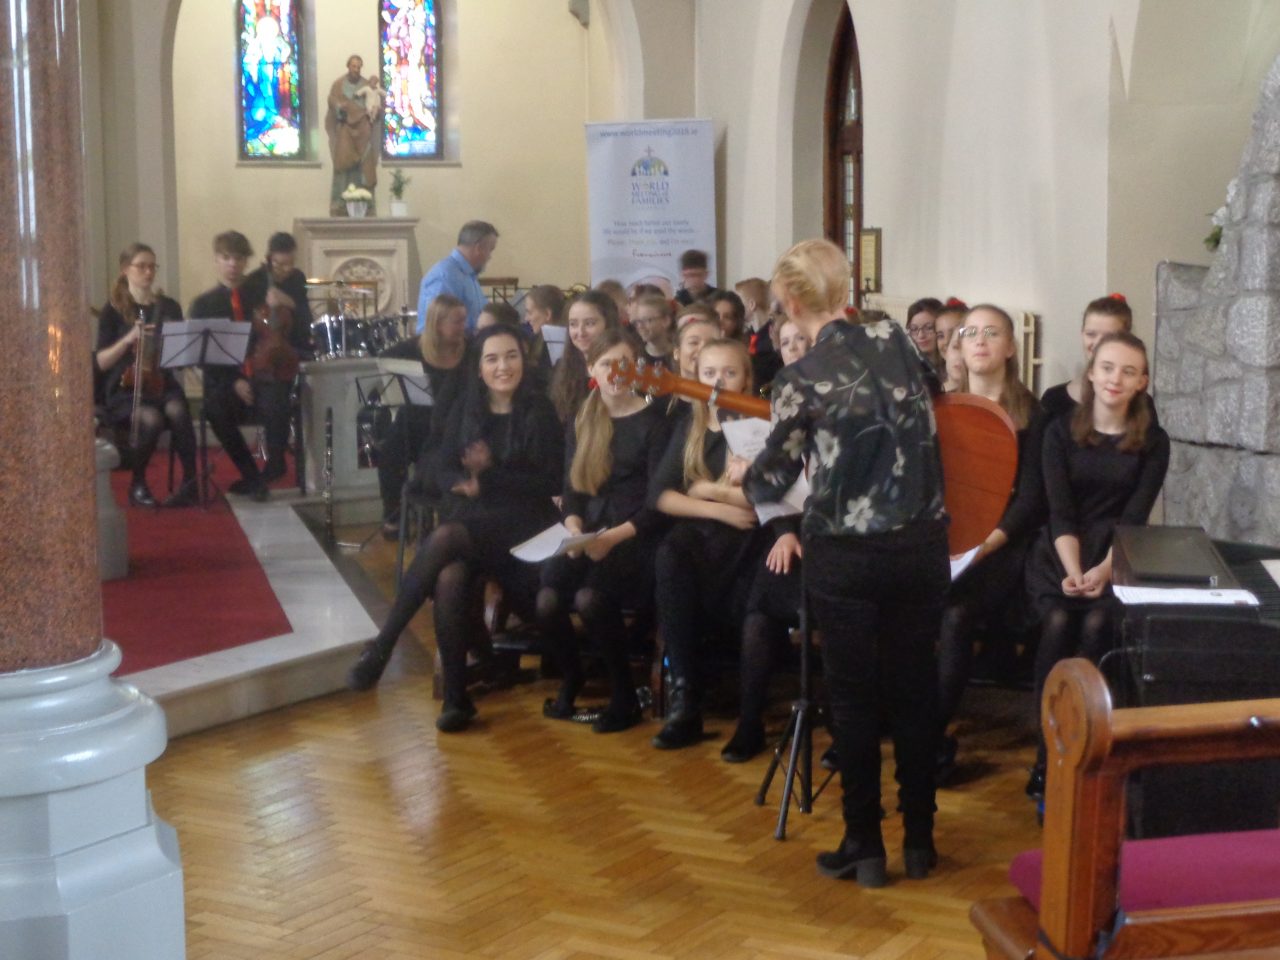 Choir from St. Nicholas Catholic High School in Cheshire Preparing to Sing